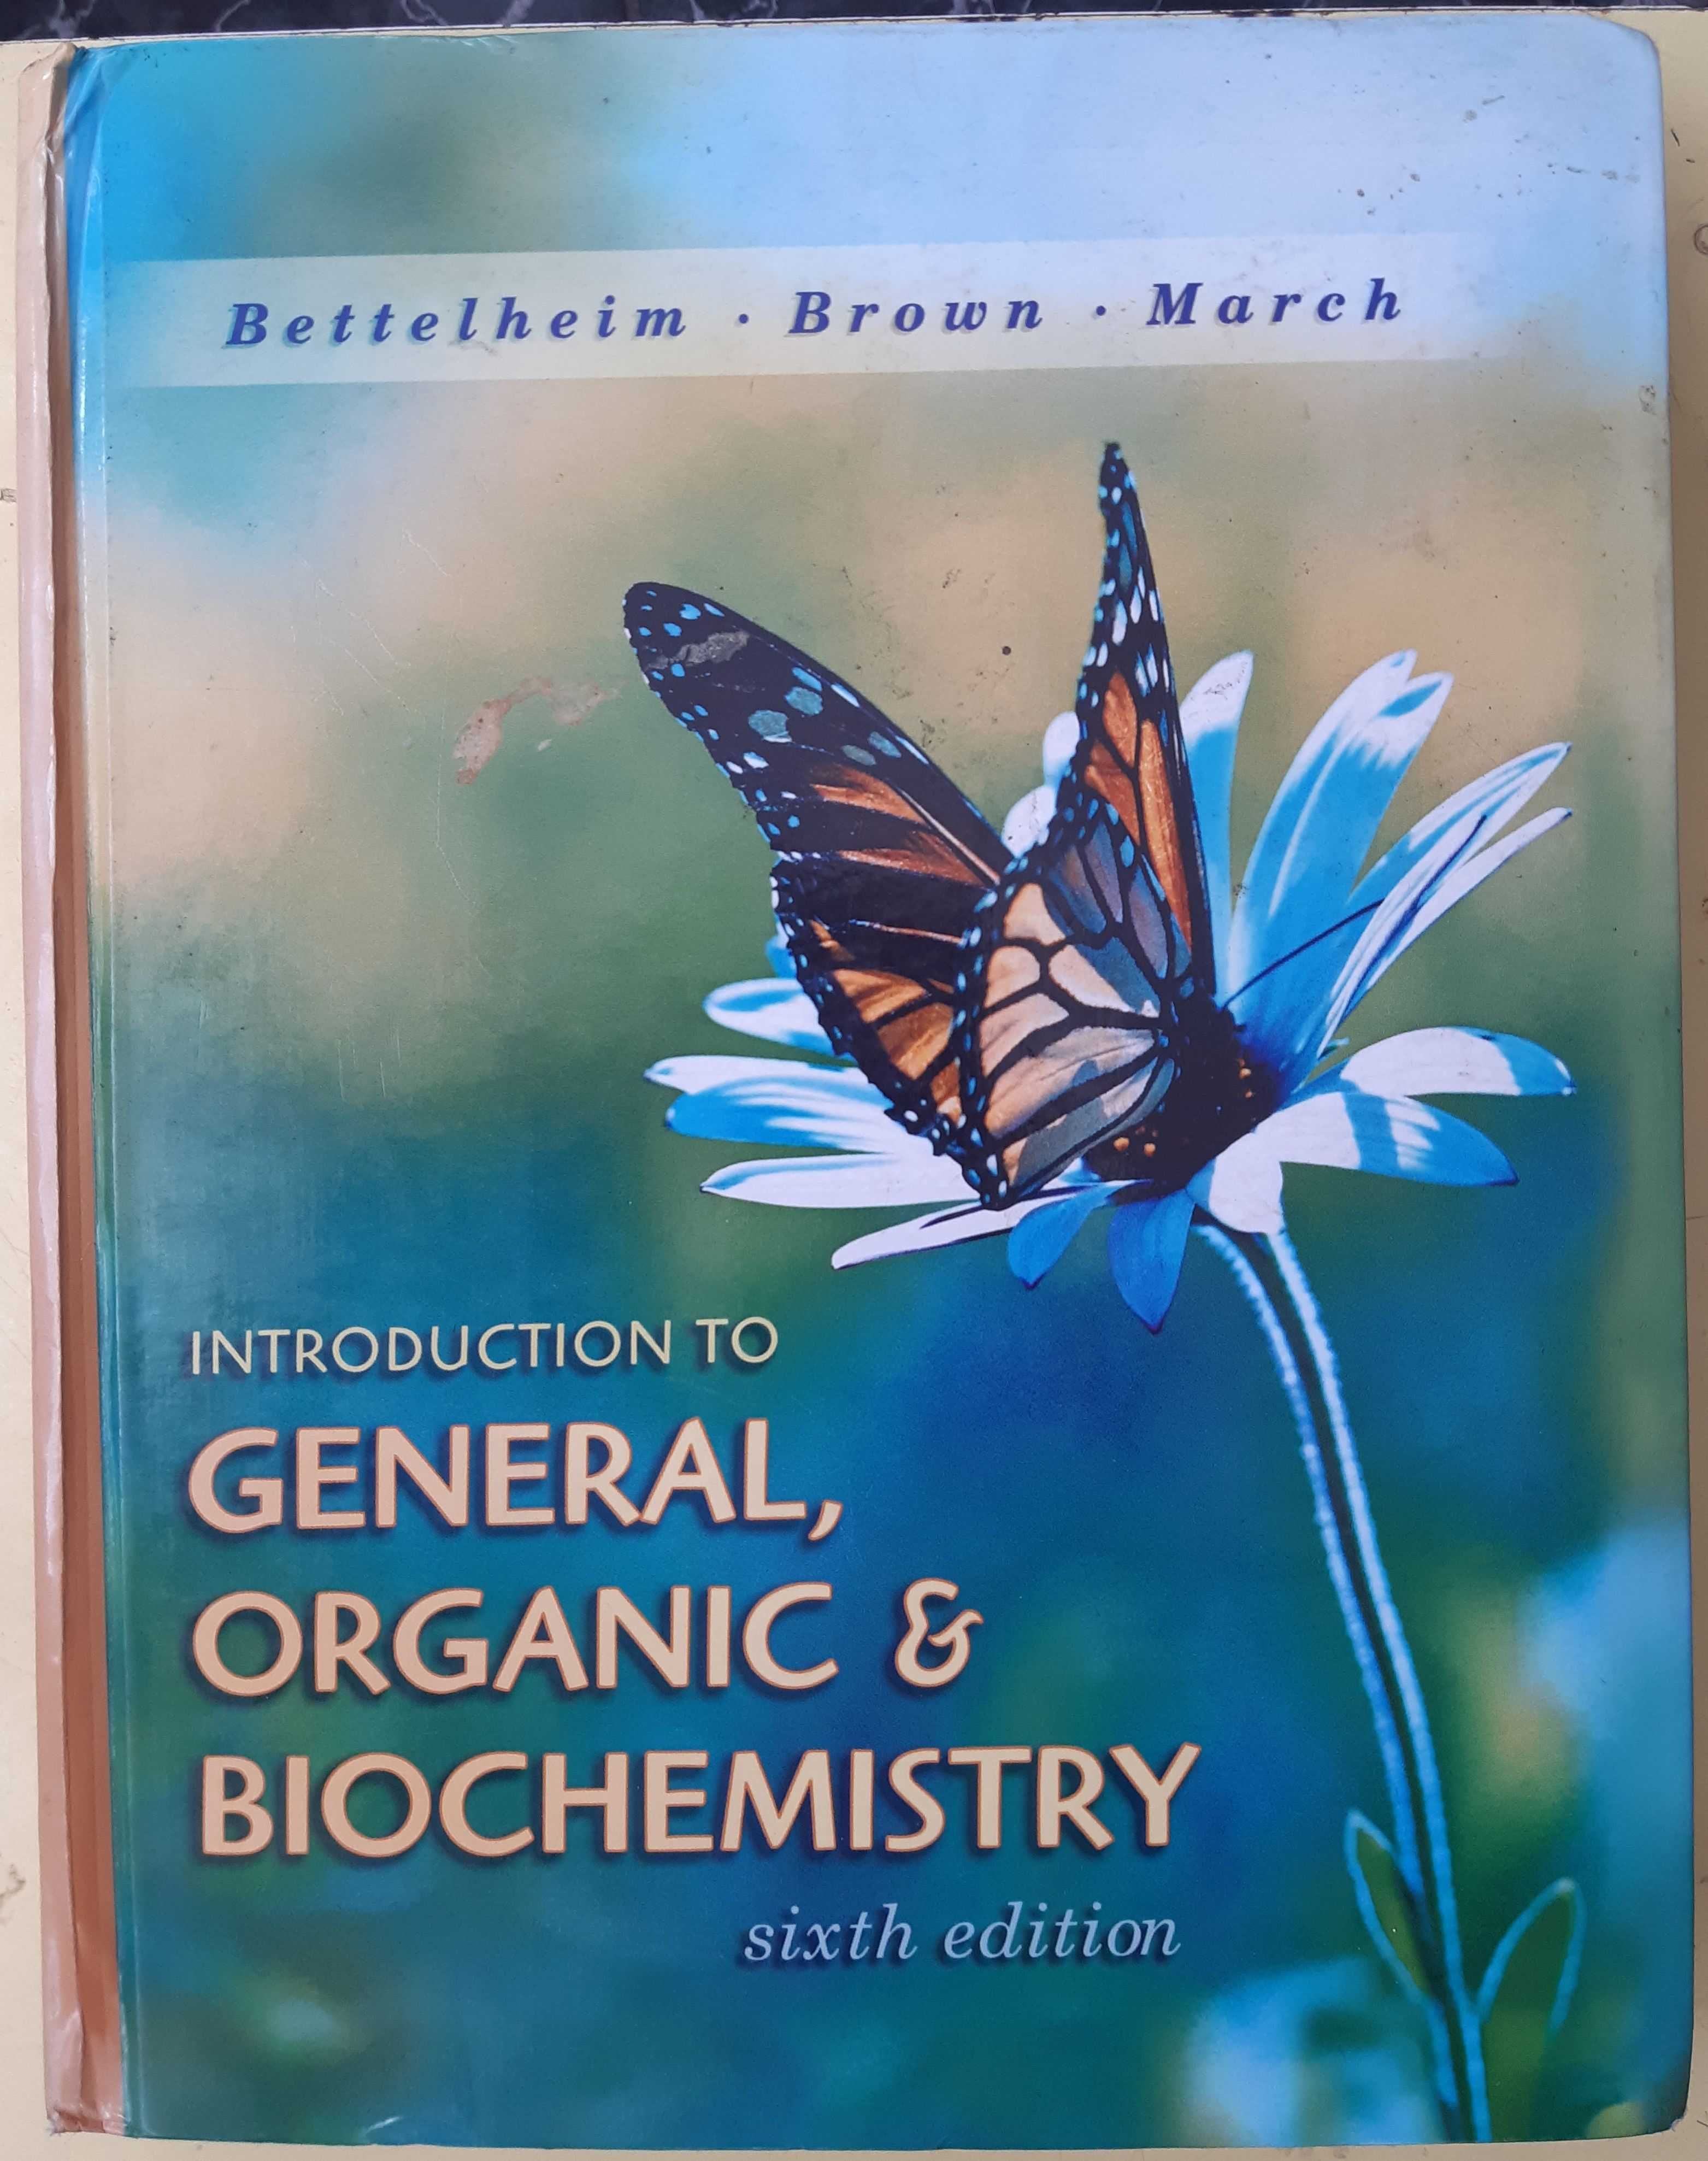 Introduction to general organic & BIOCHEMISTRY